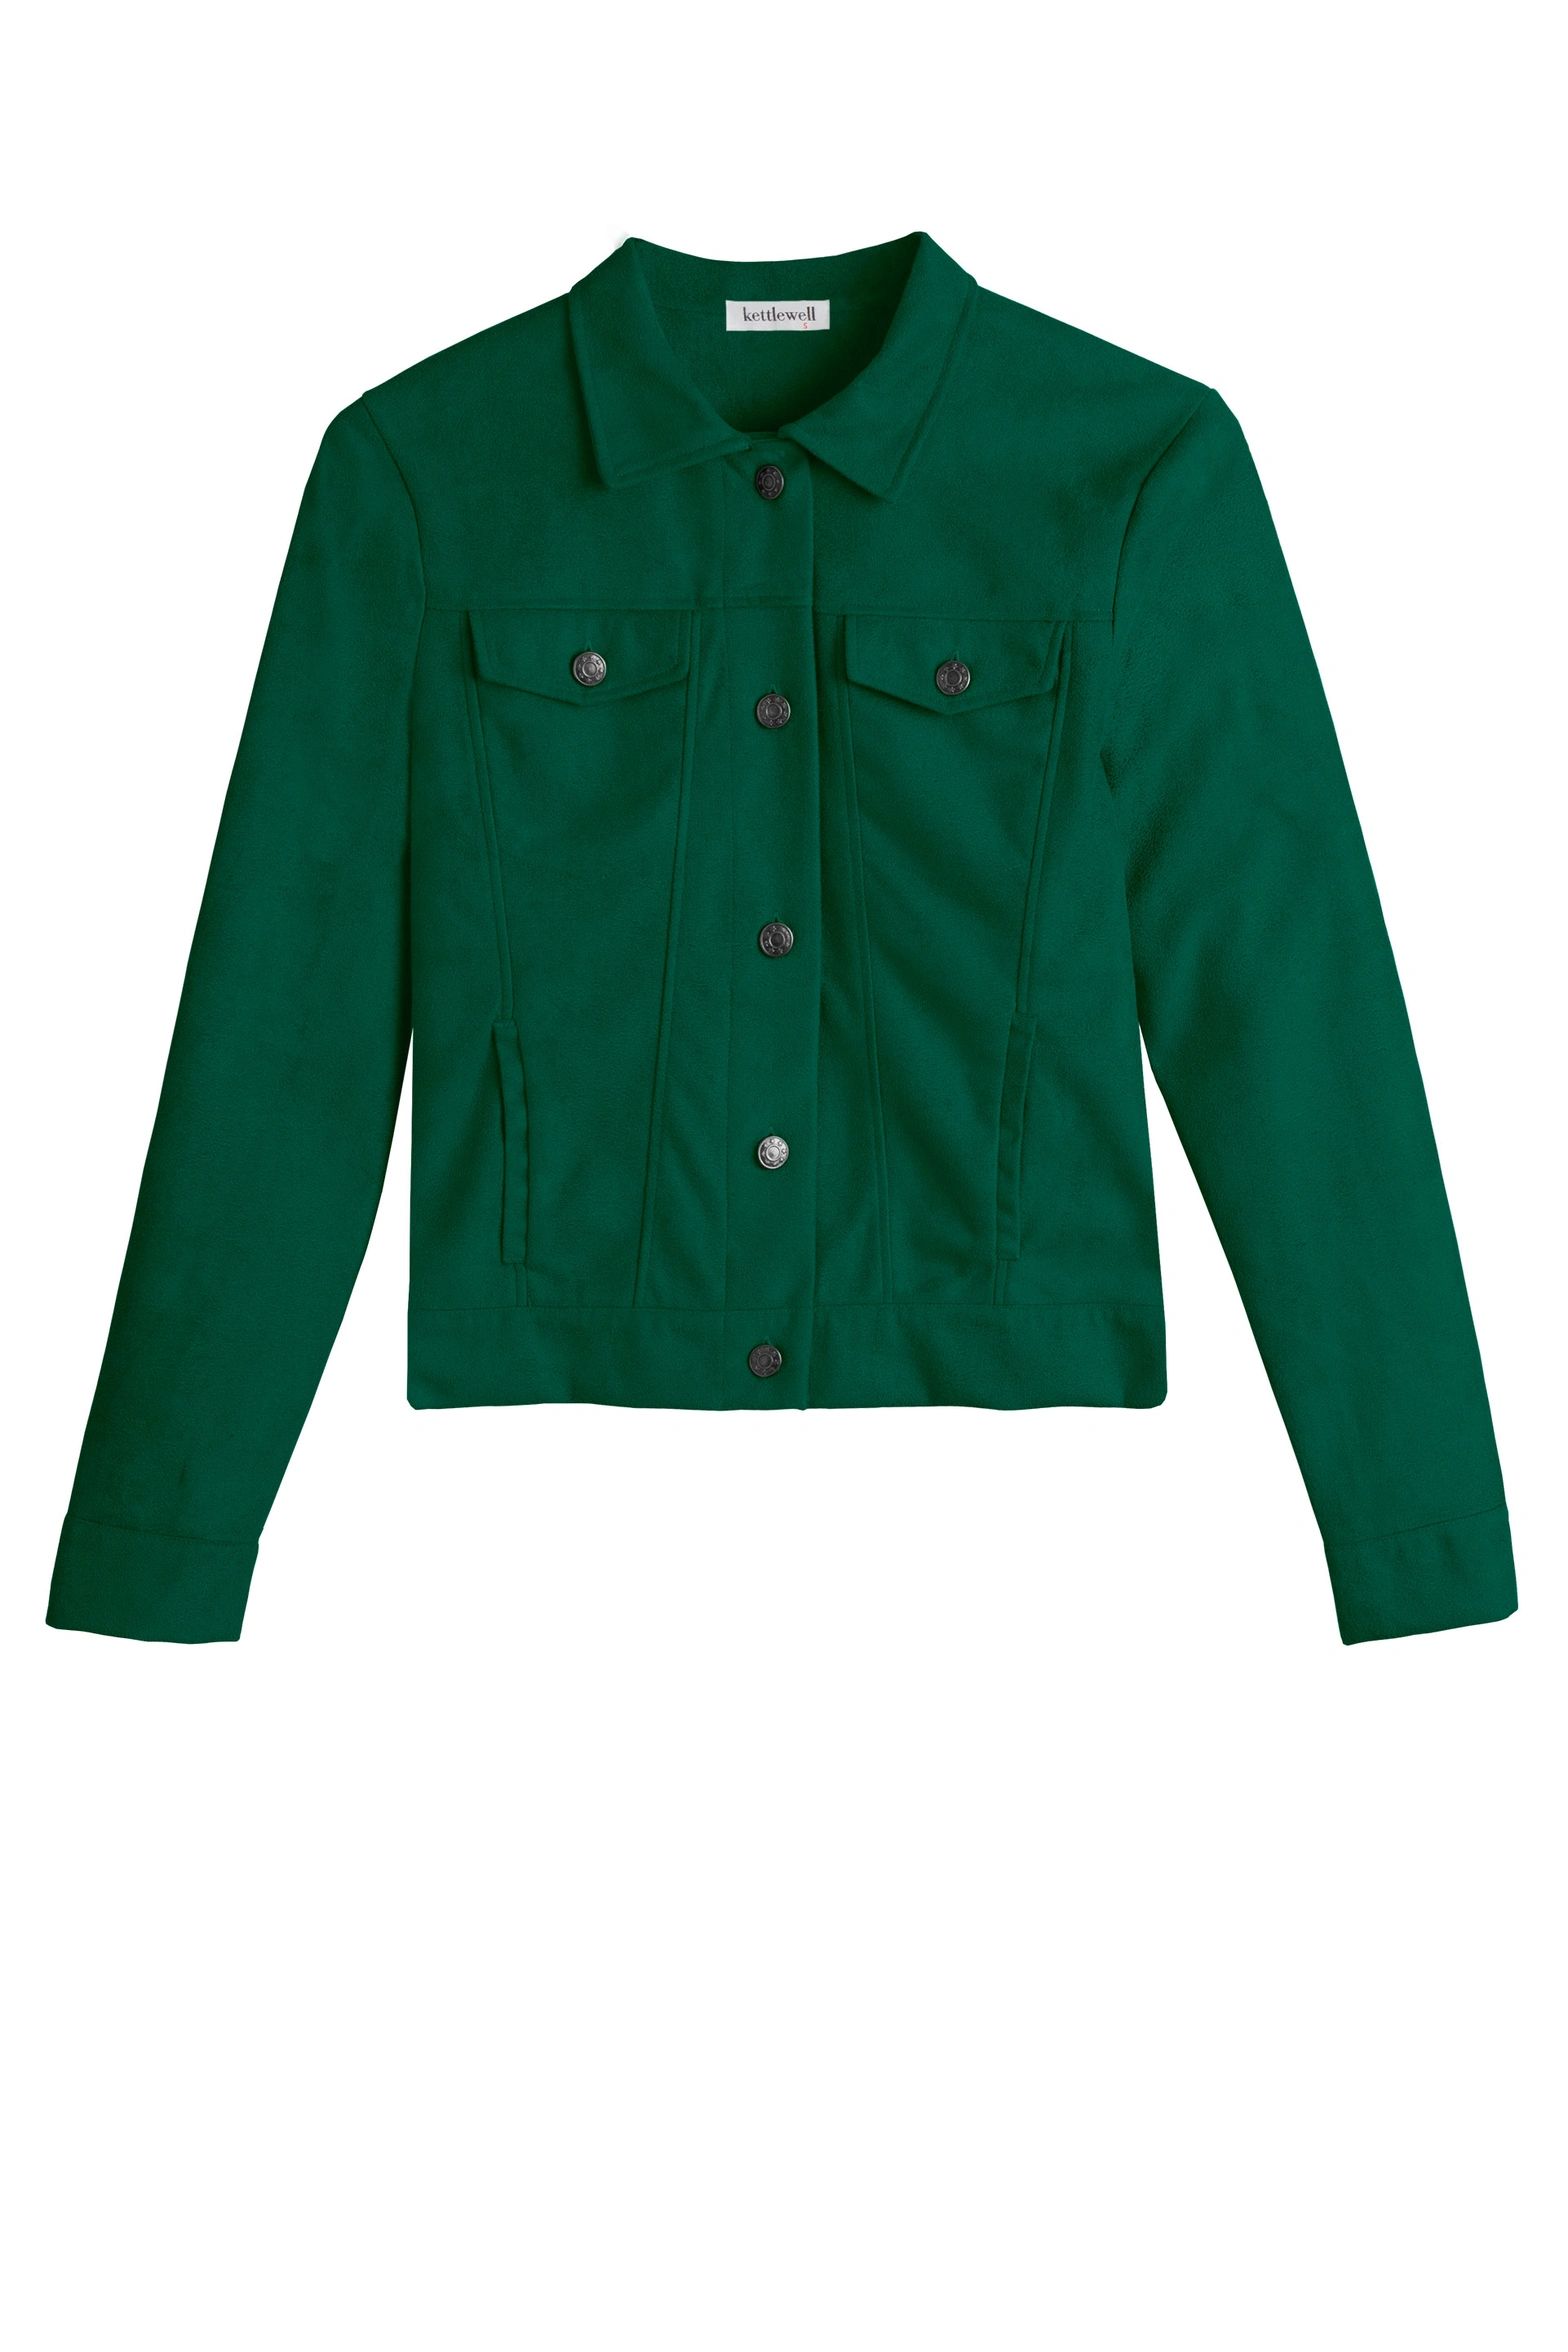 Roxy Shirt Jacket | Kettlewell Colours